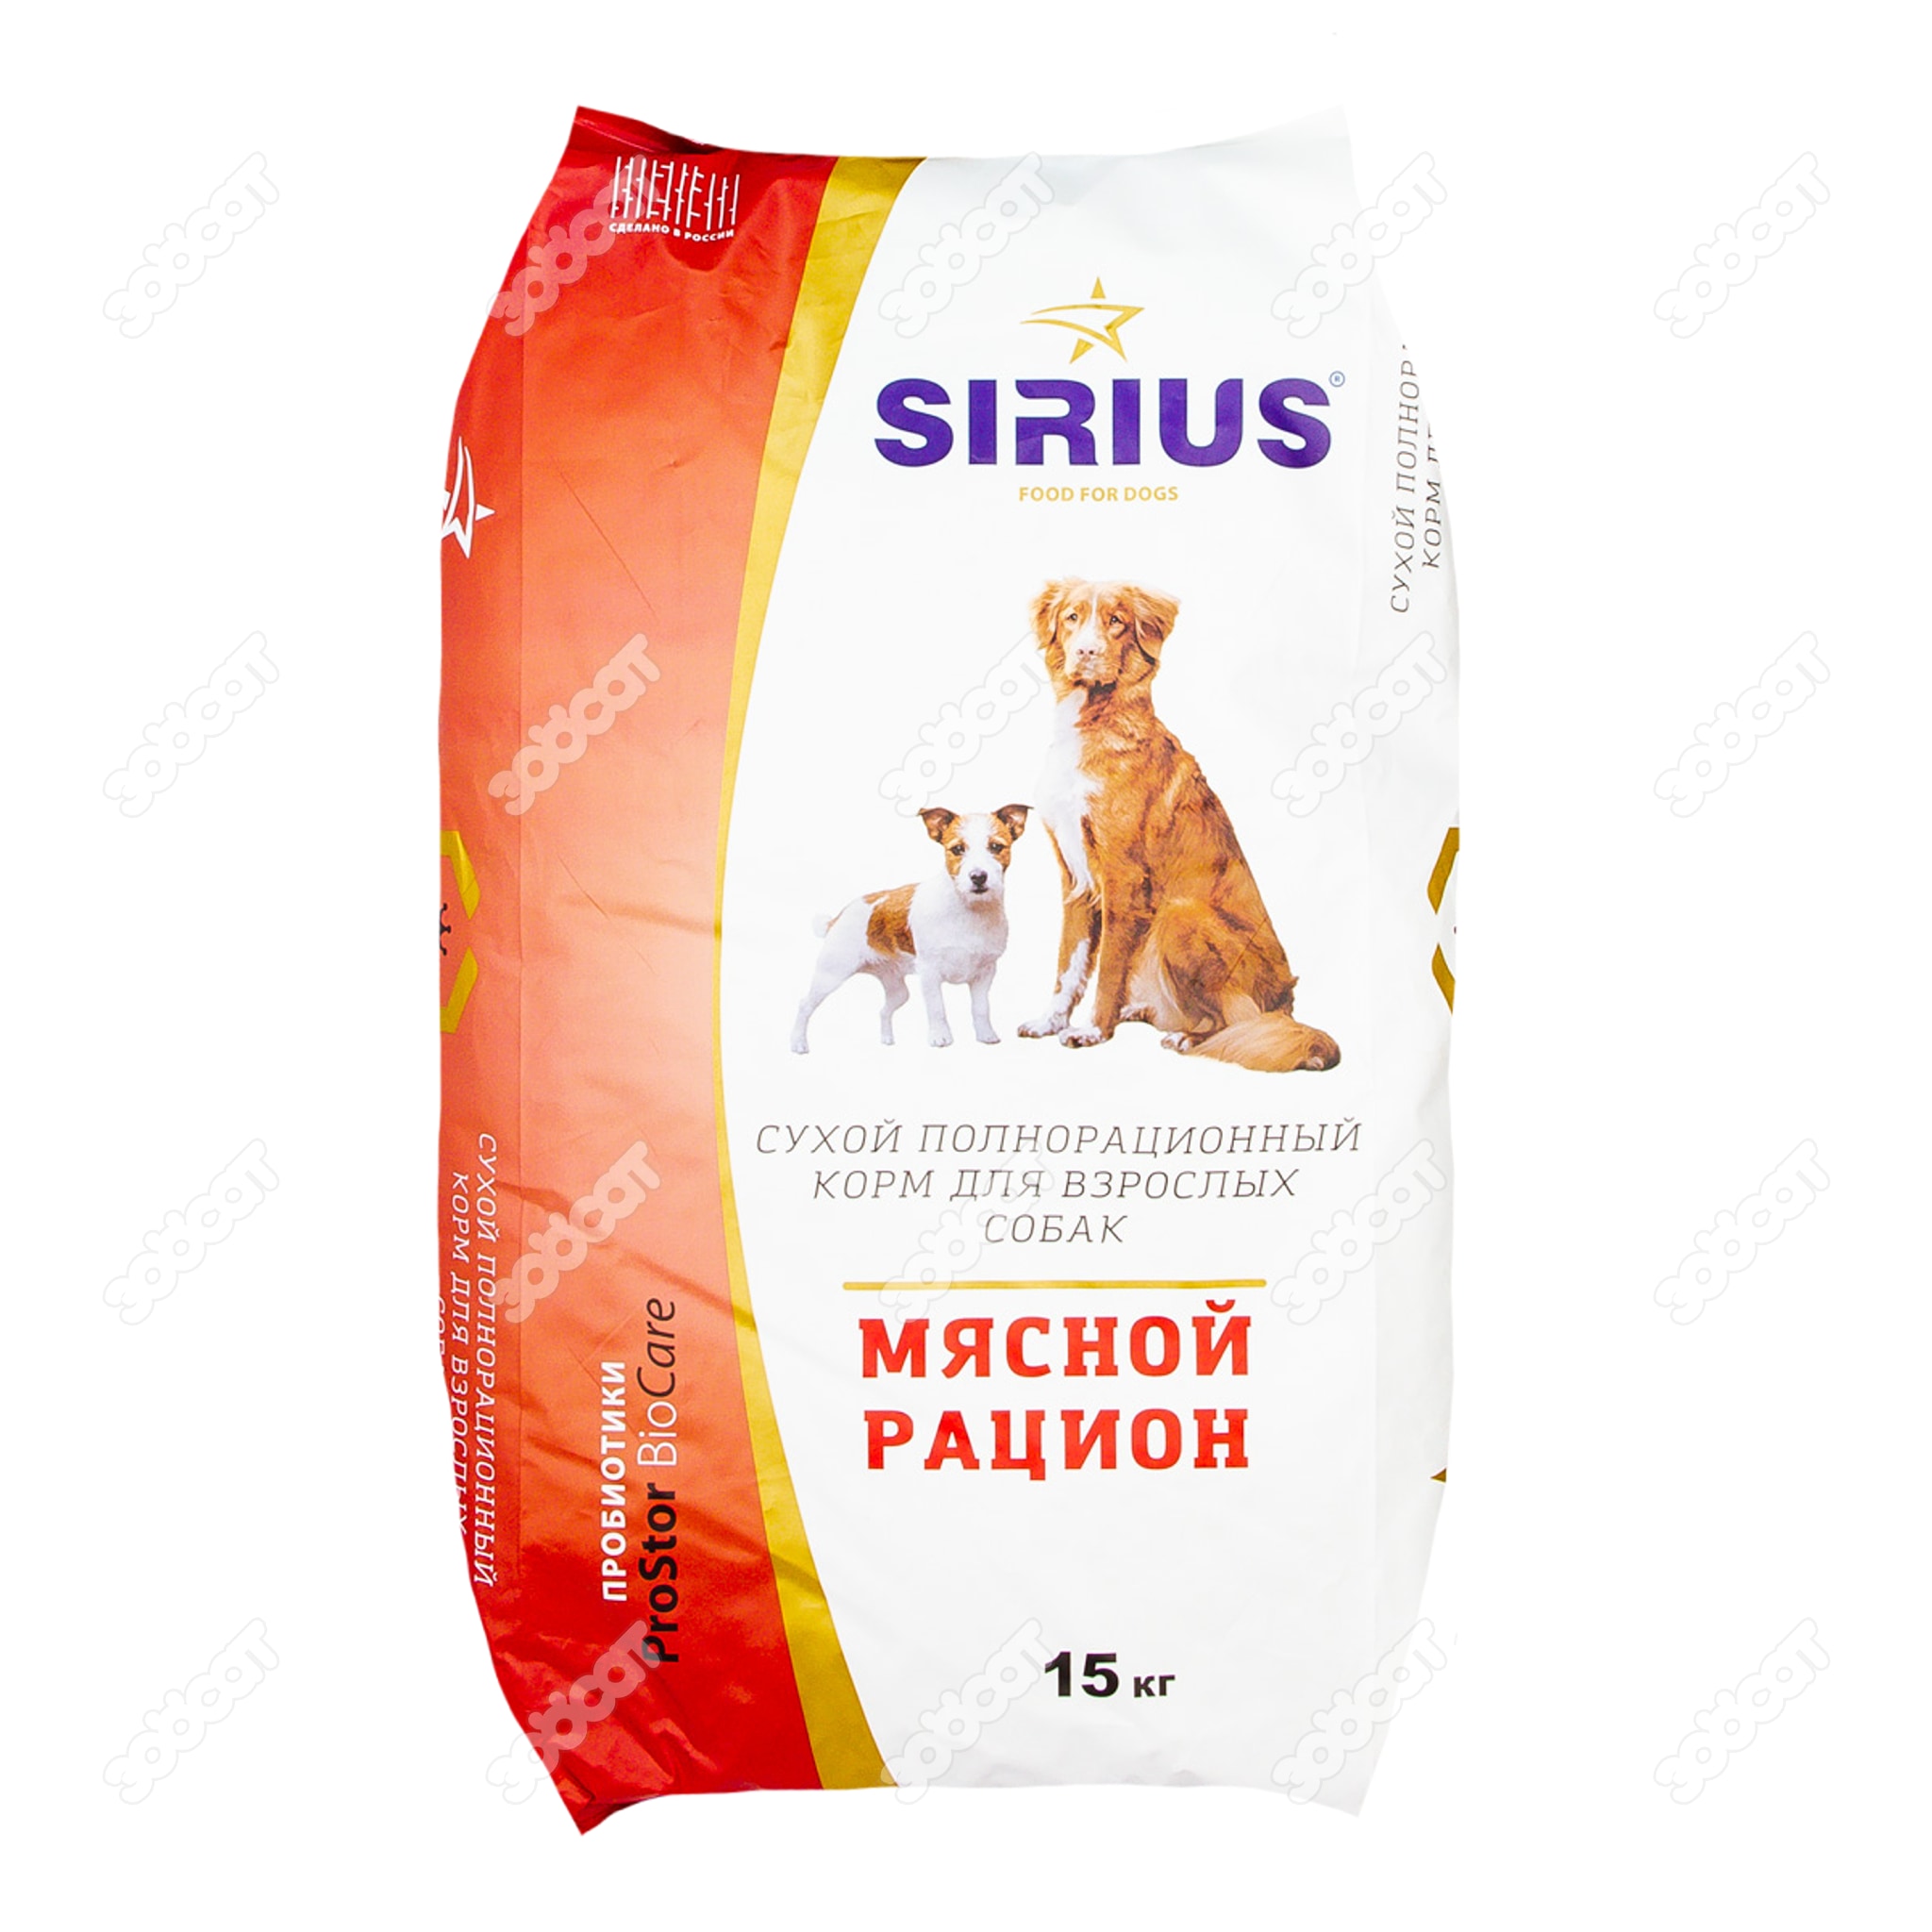 Сухой корм для собак 20кг. Сириус корм для собак 15 кг. Sirius корм для собак 15кг. Корм Сириус для щенков 15кг. Сириус корм для собак 20 кг состав.